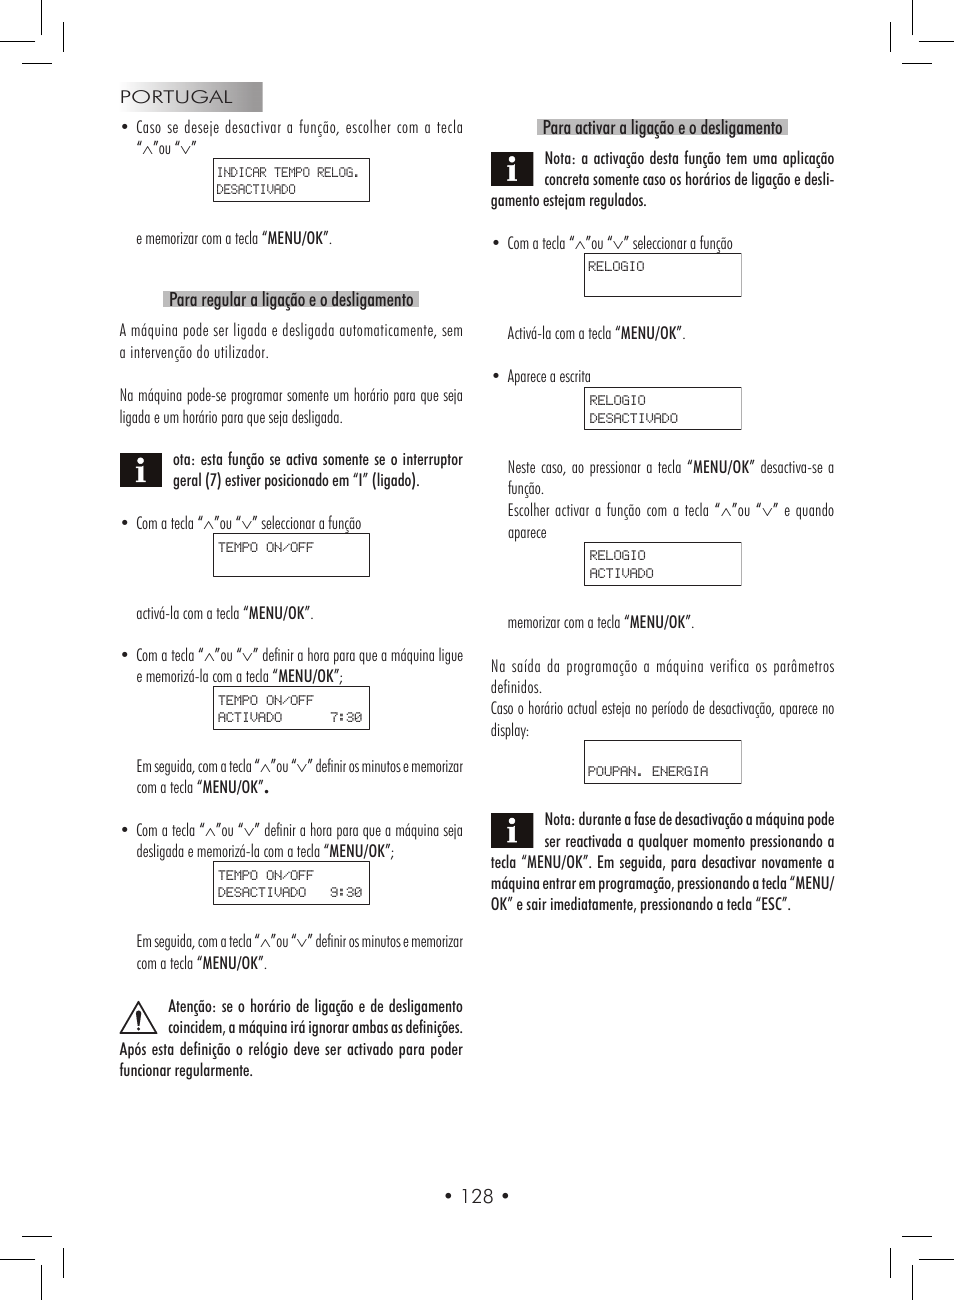 Gaggia Titanium User Manual | Page 128 / 132 | Original mode